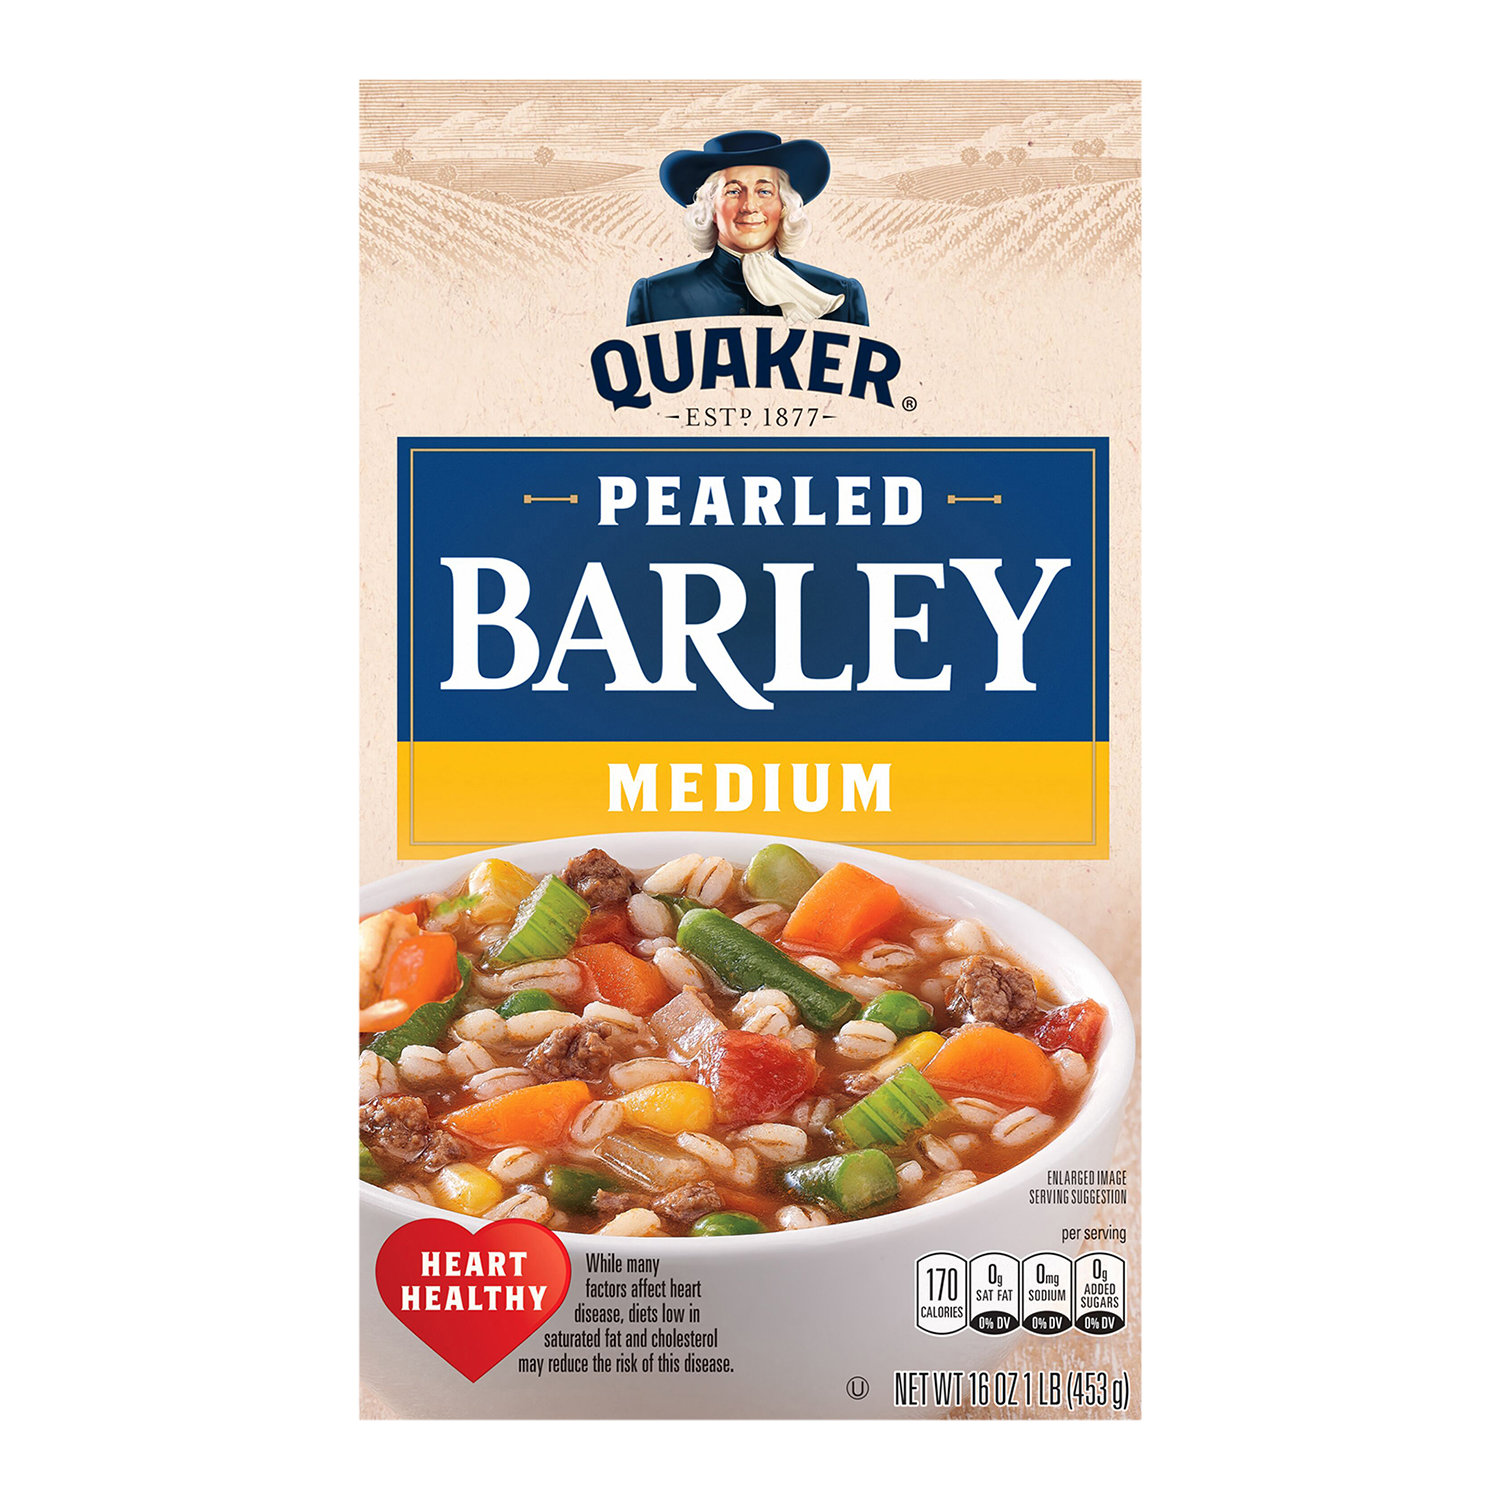 Quaker Barley, Medium, Pearled